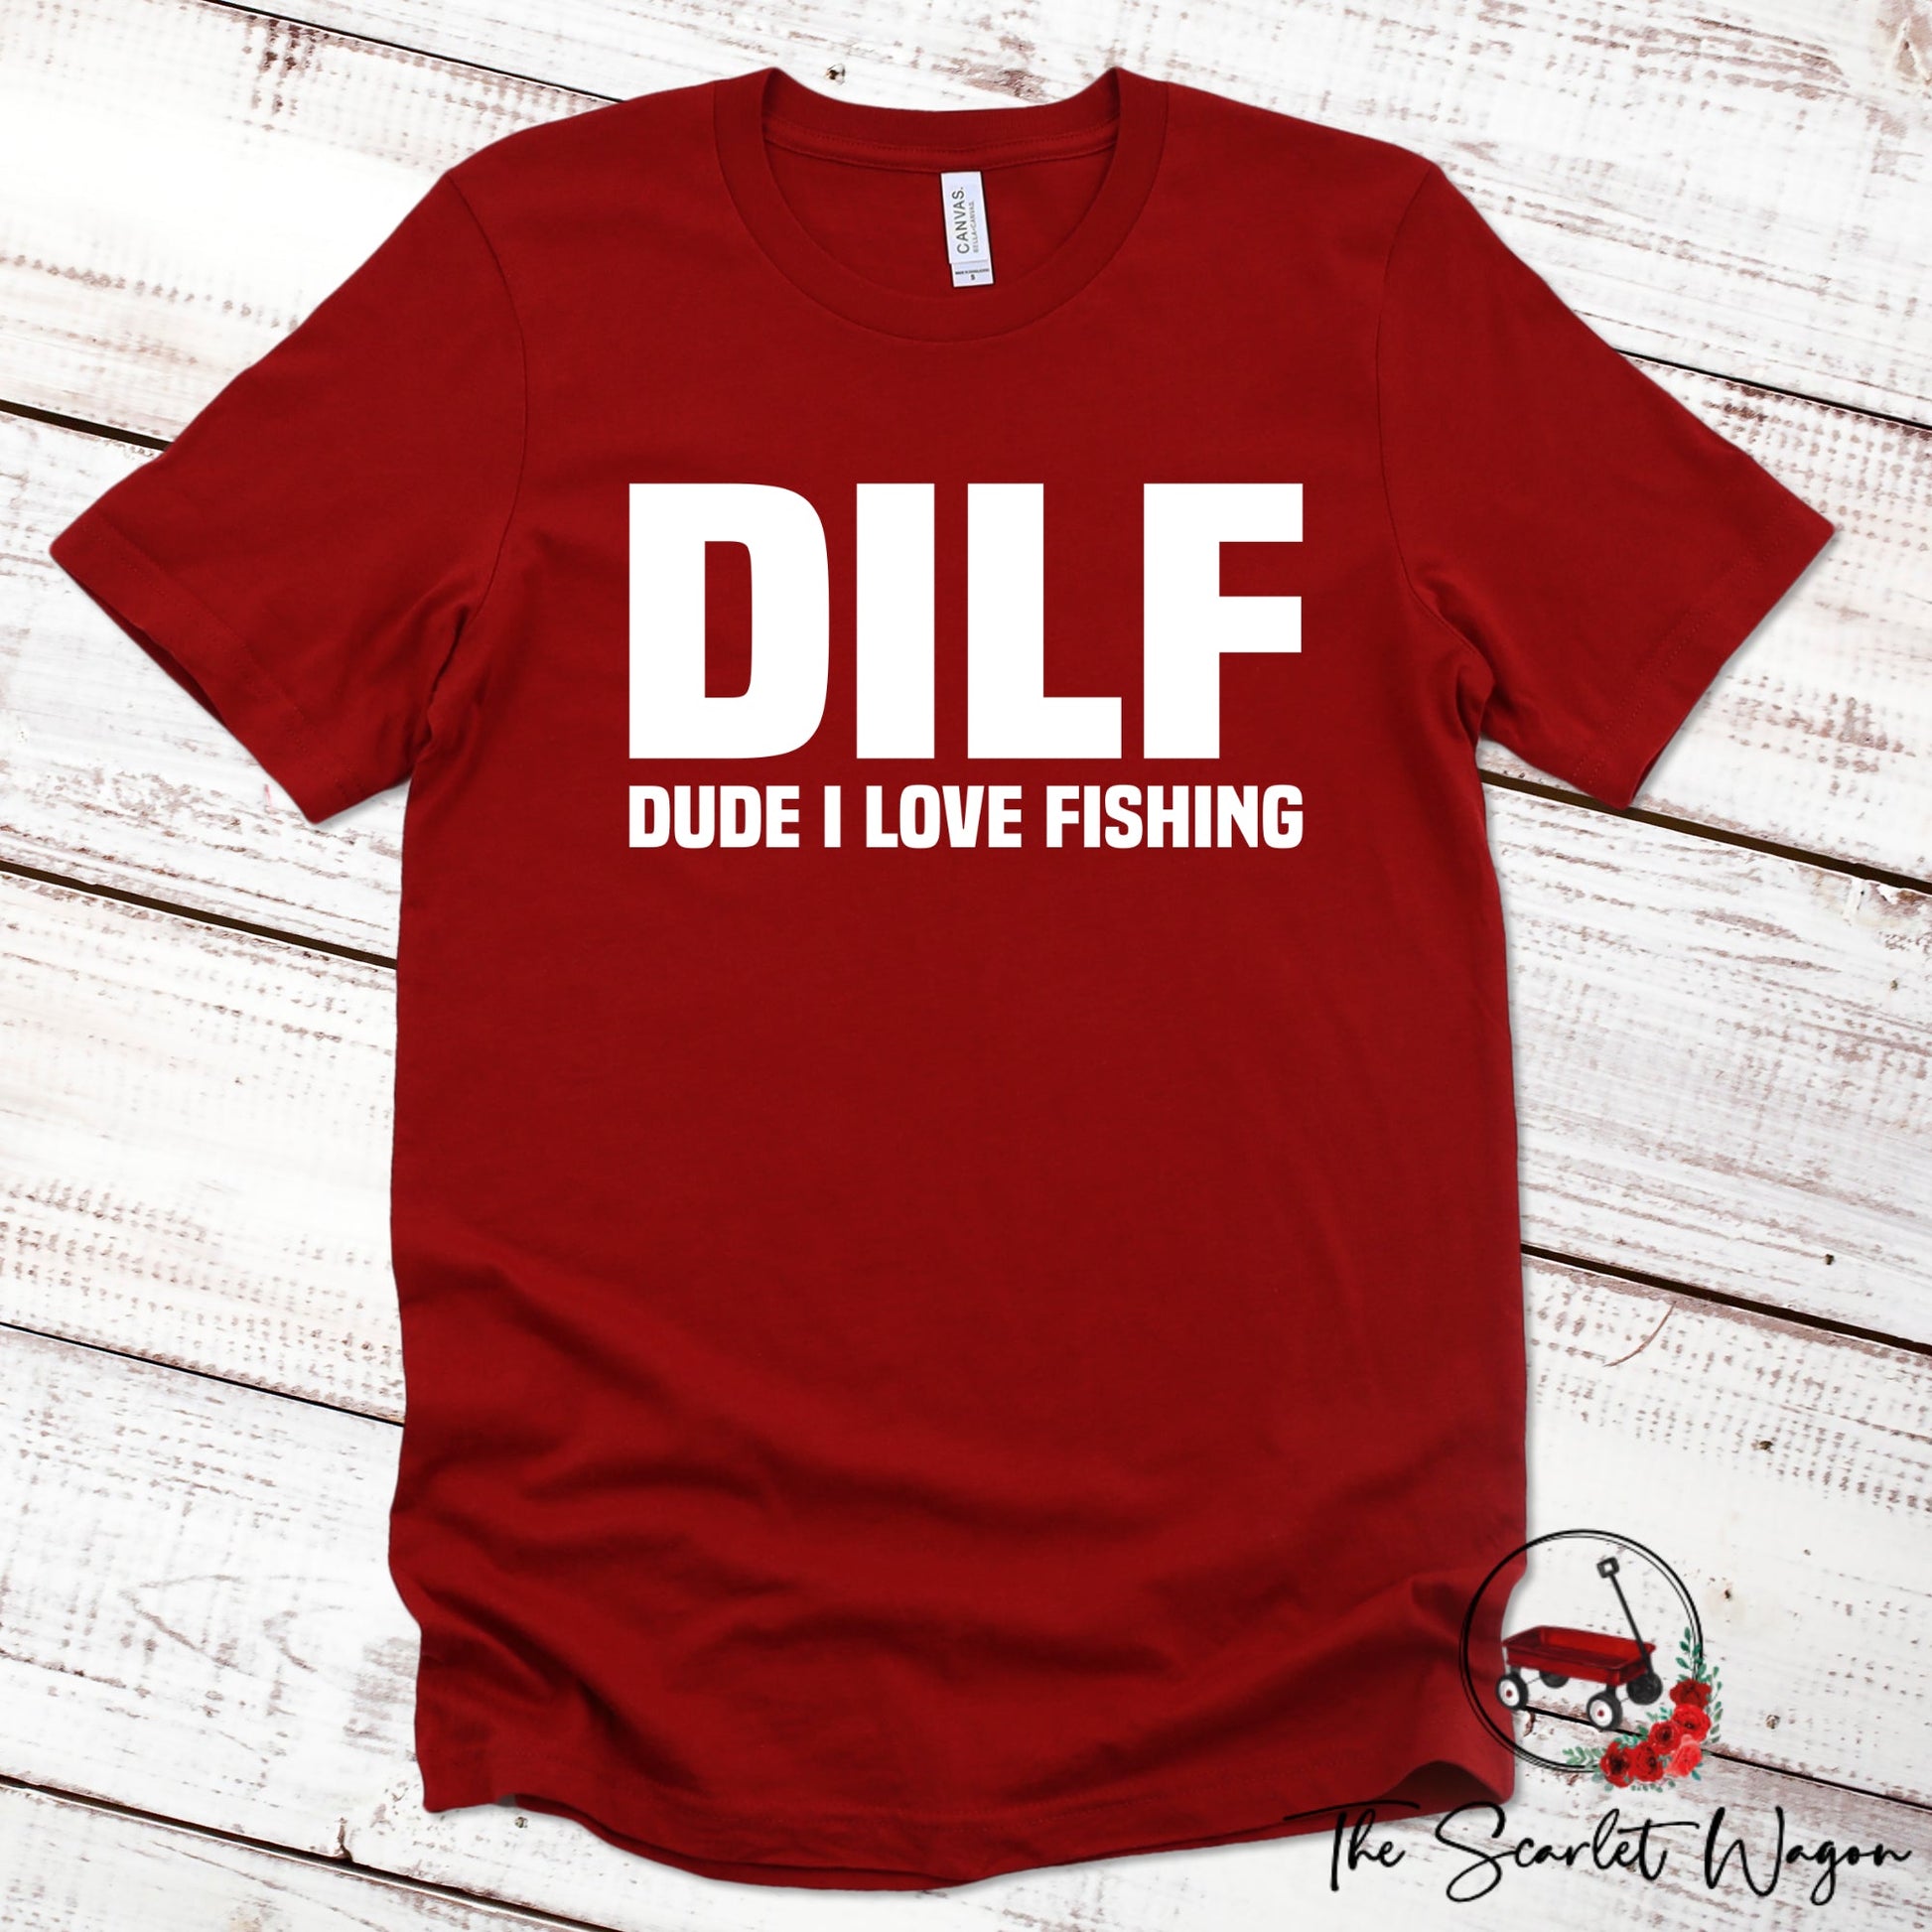 DILF - Dude I Love Fishing Premium Tee Scarlet Wagon Red XS 